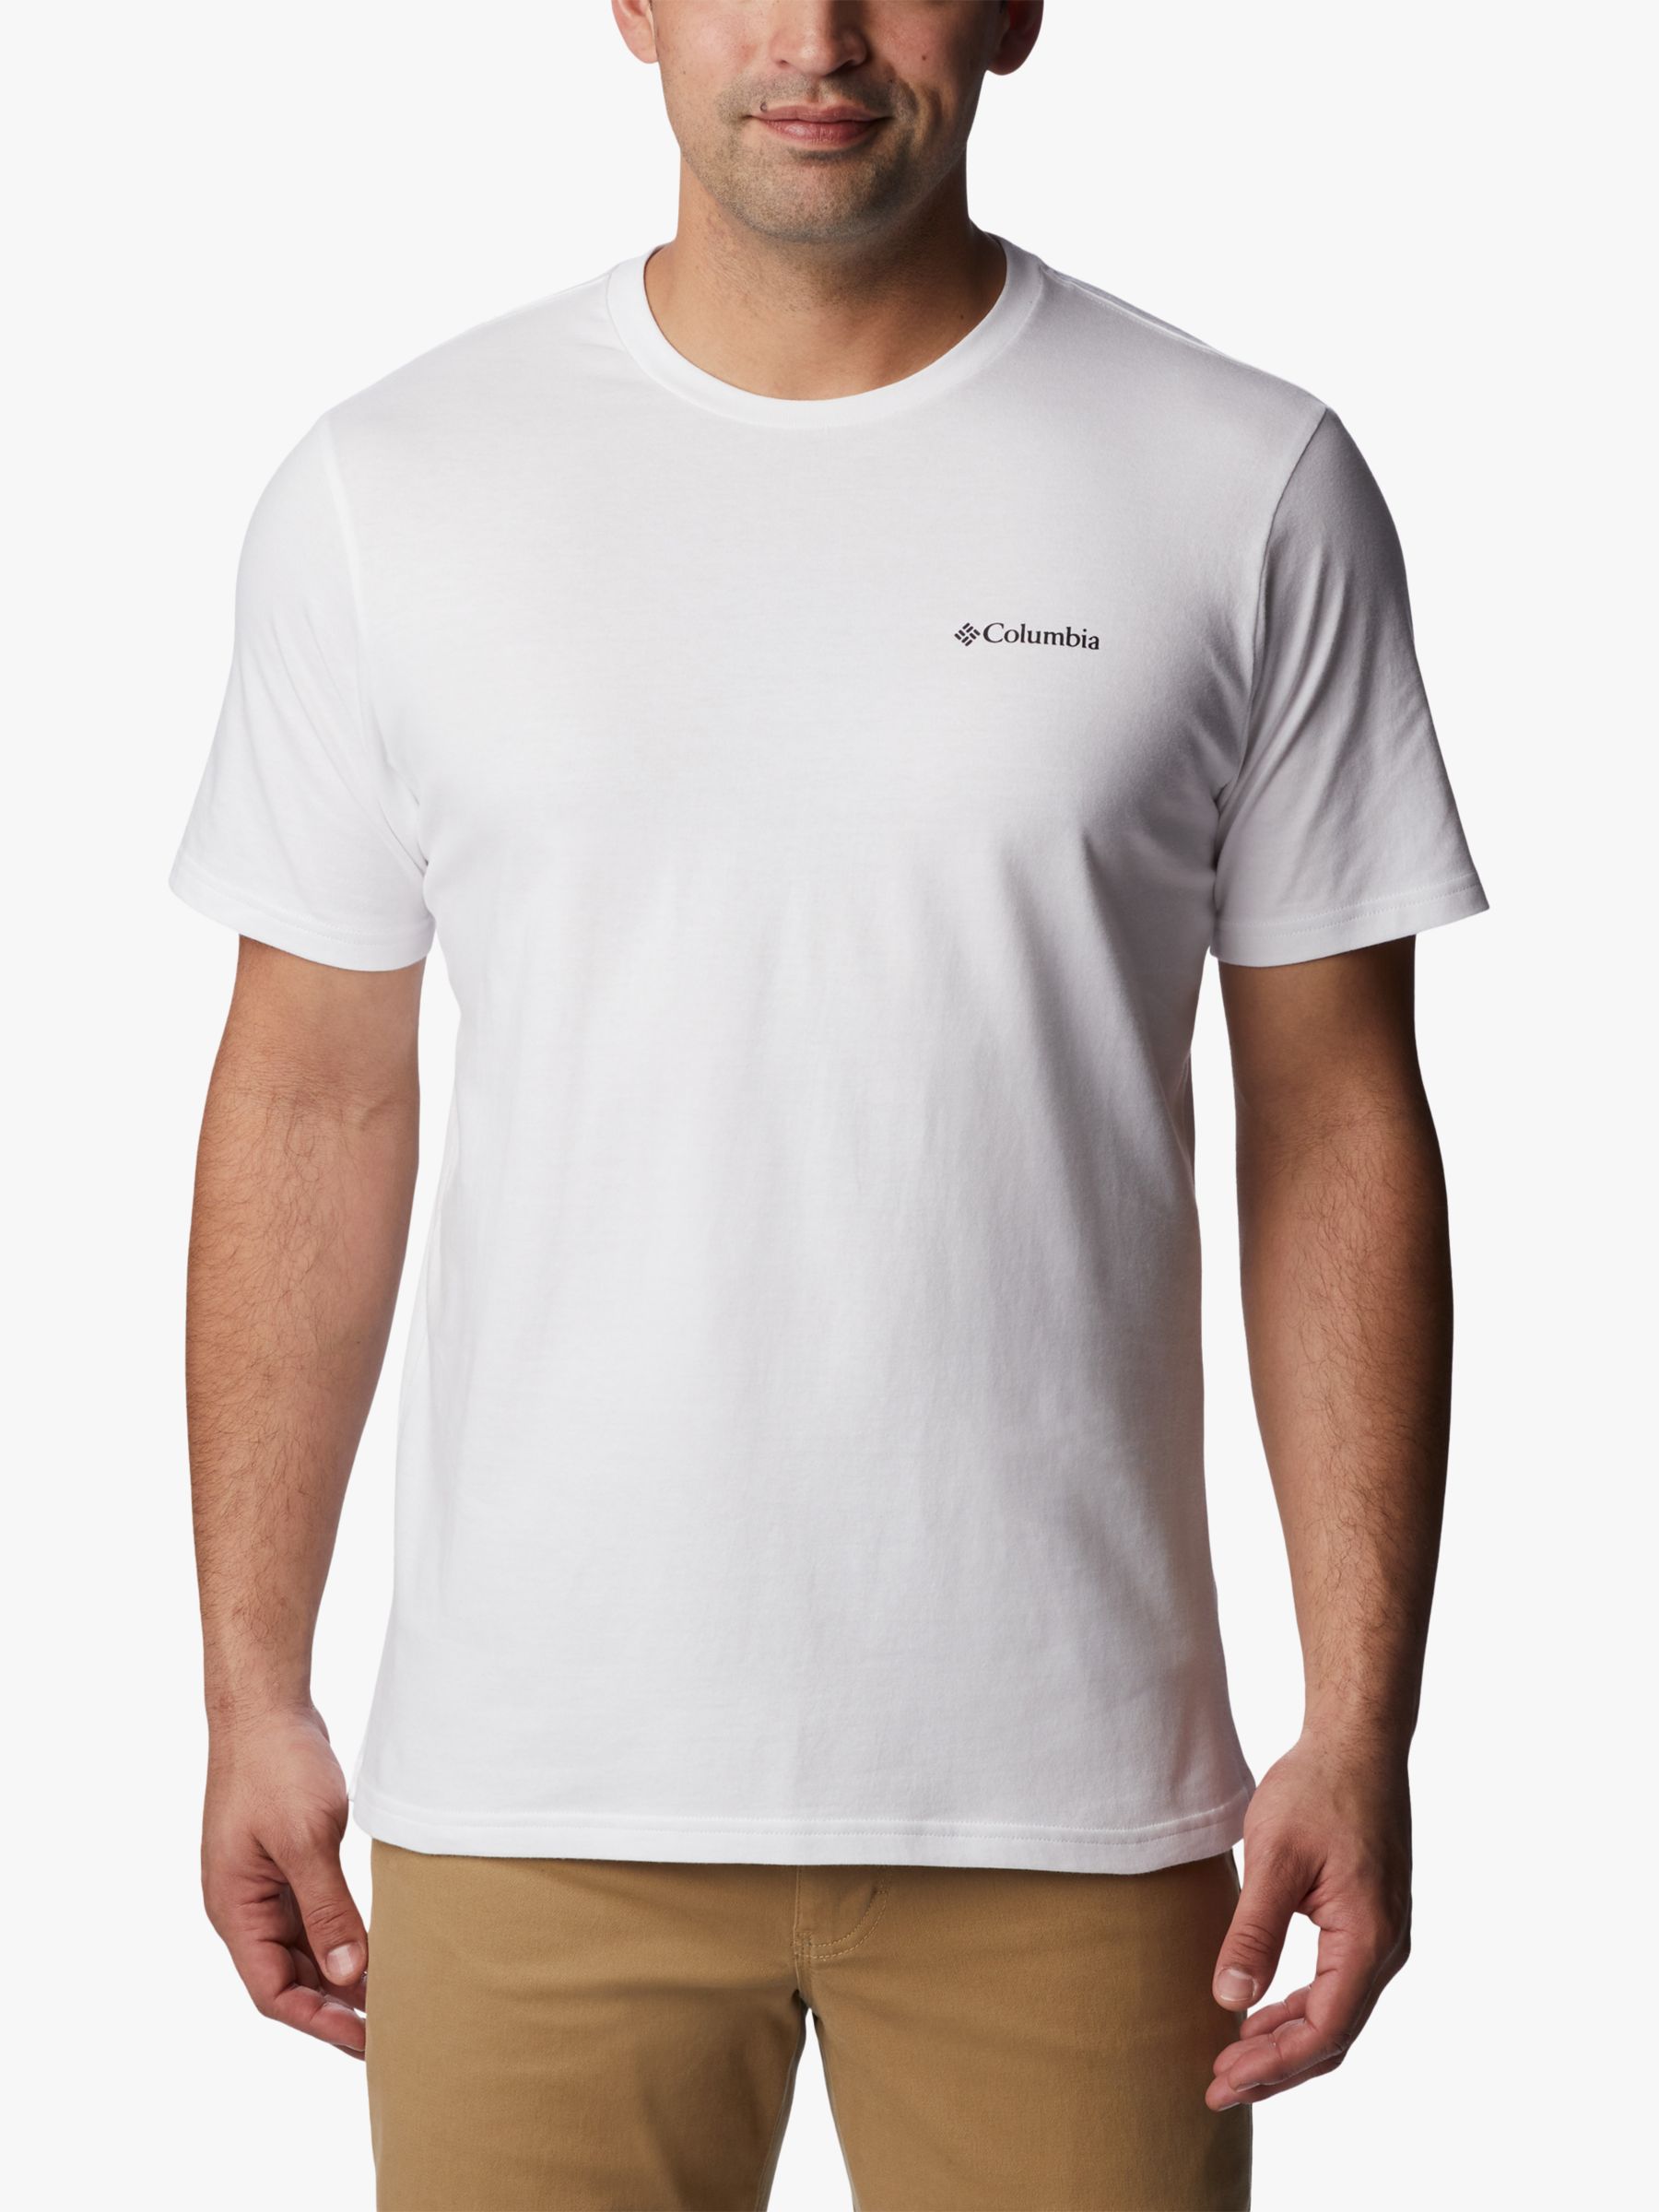 Columbia North Cascades Cotton T-shirt, White, S